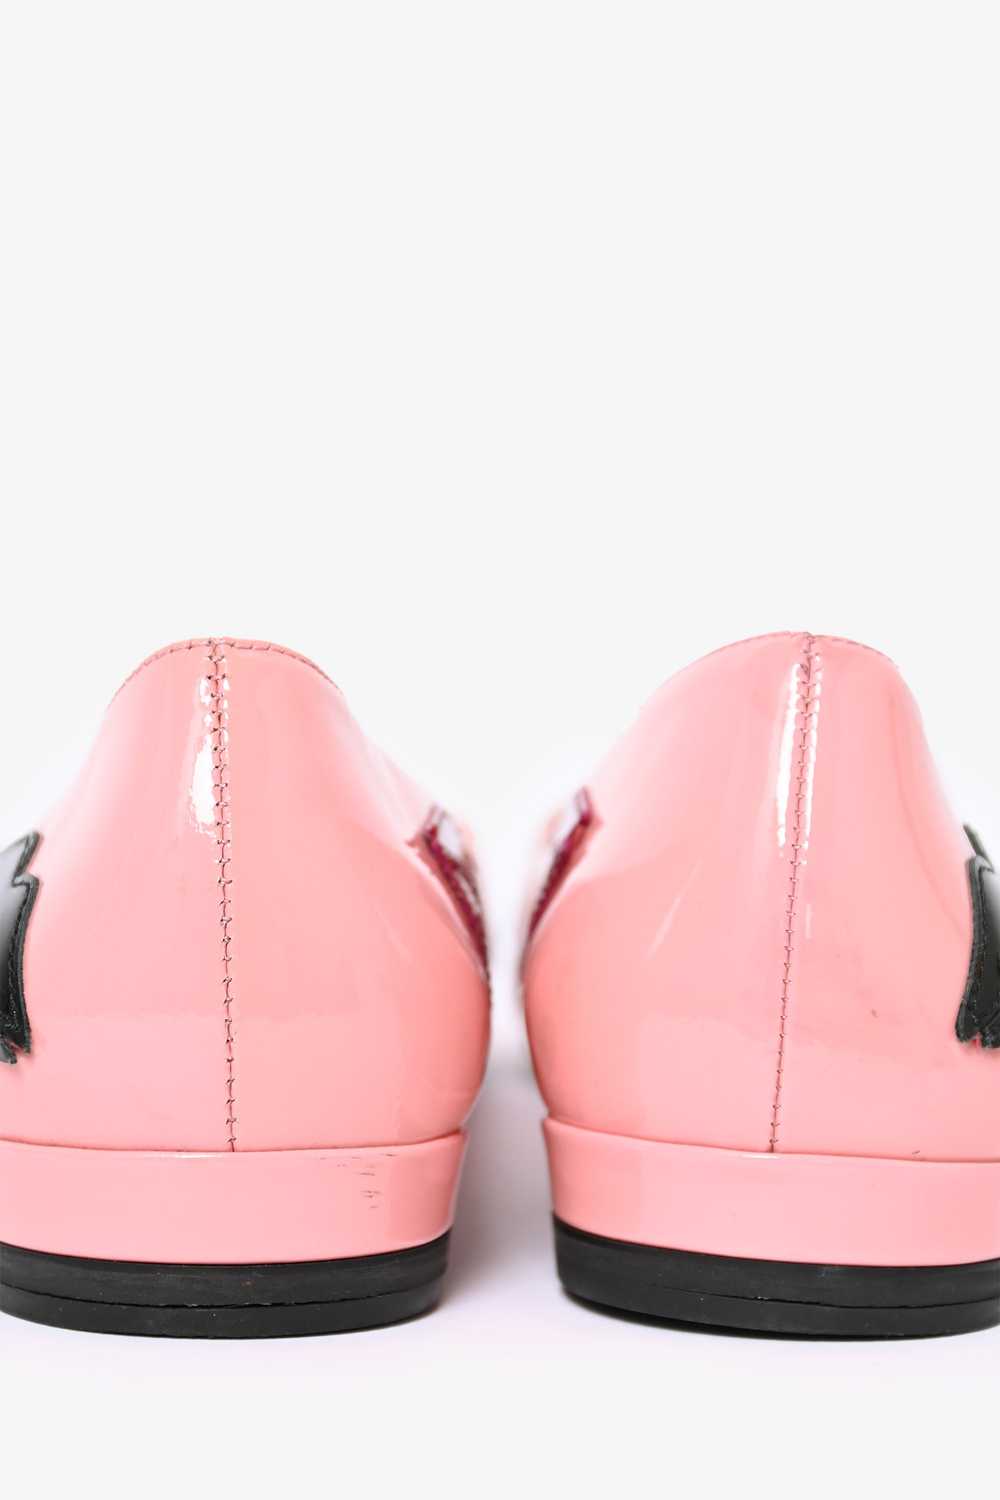 Prada Pink Patent Leather Kiss Print Flats Size 36 - image 4